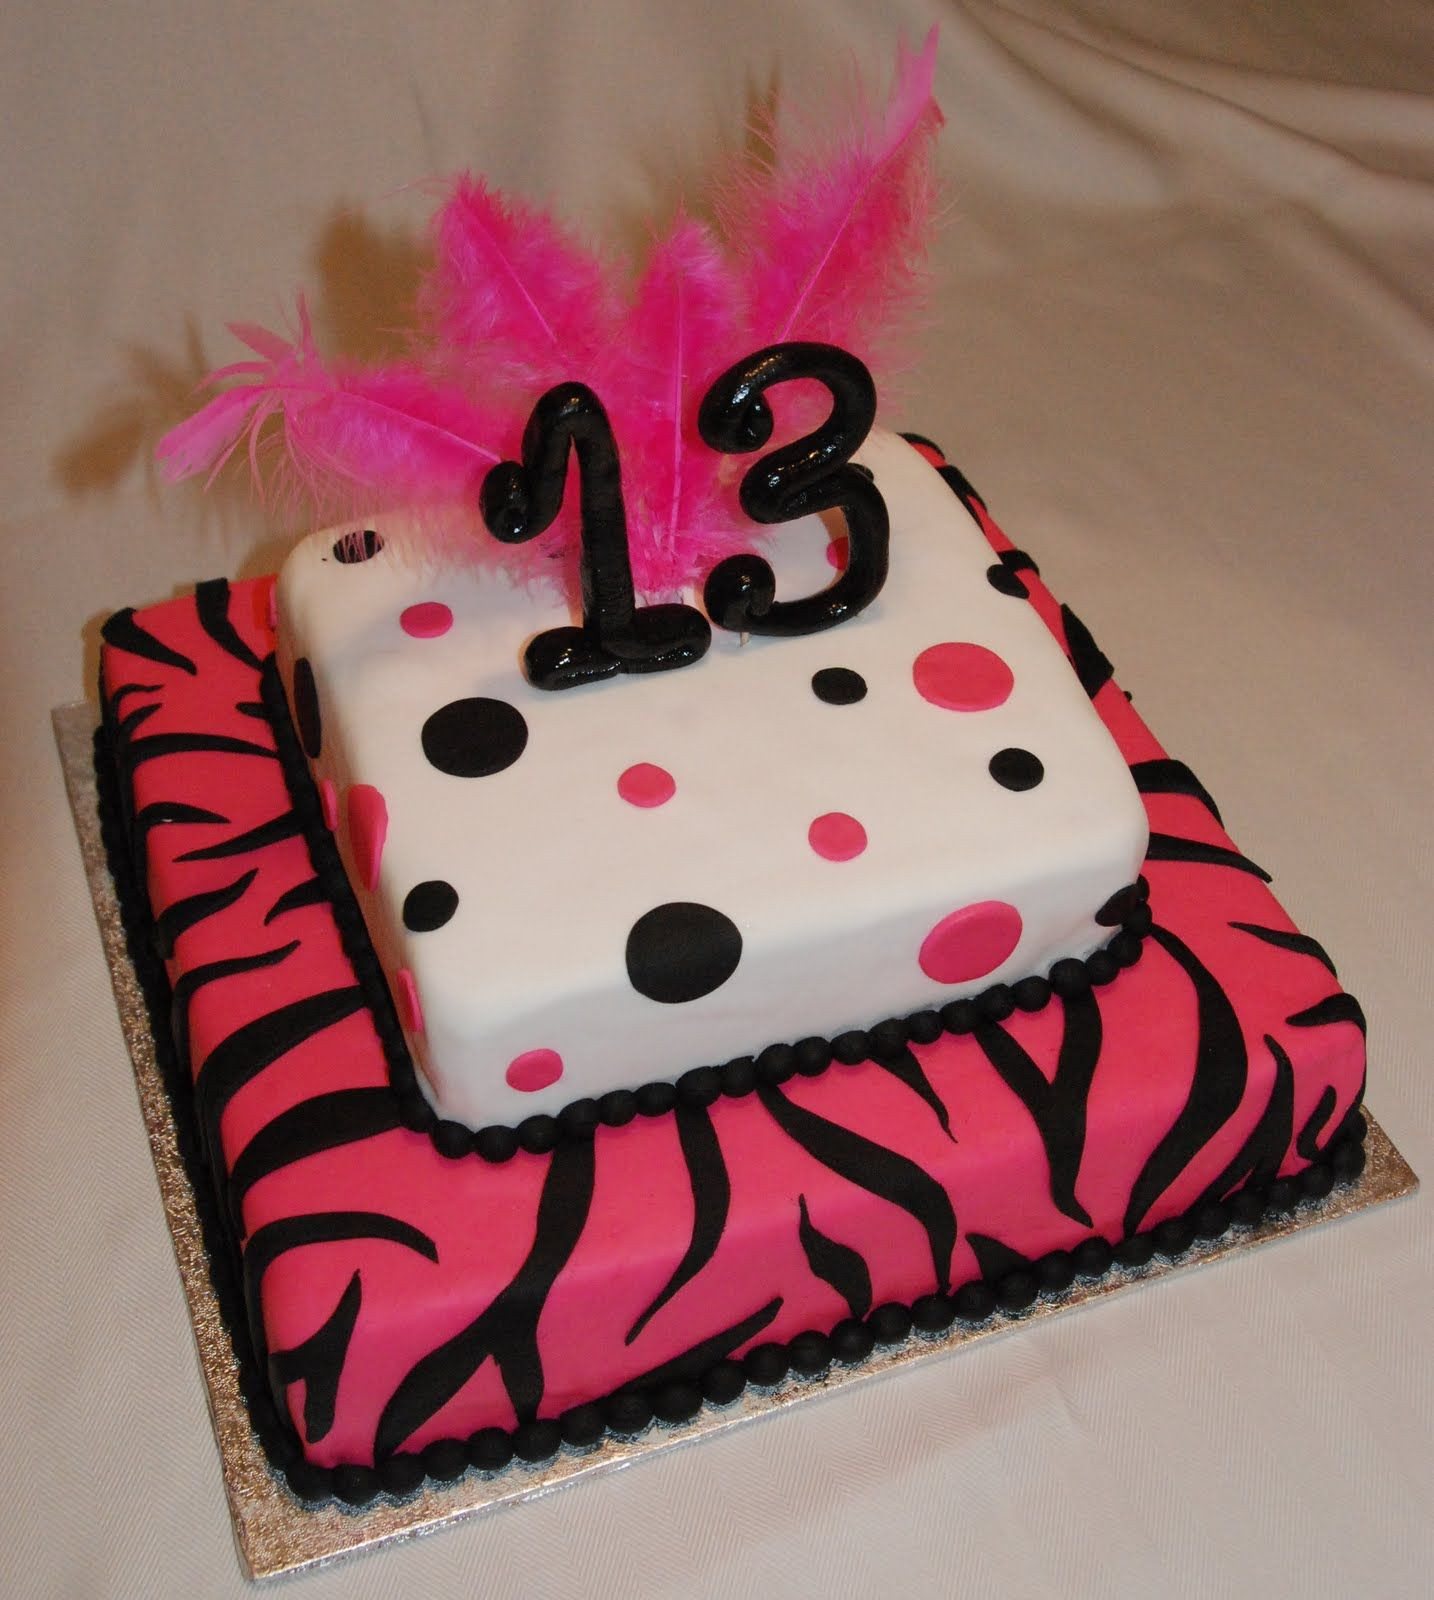 Best ideas about 13th Birthday Cake Ideas
. Save or Pin 13th birthday zebra polka dot cake Now.